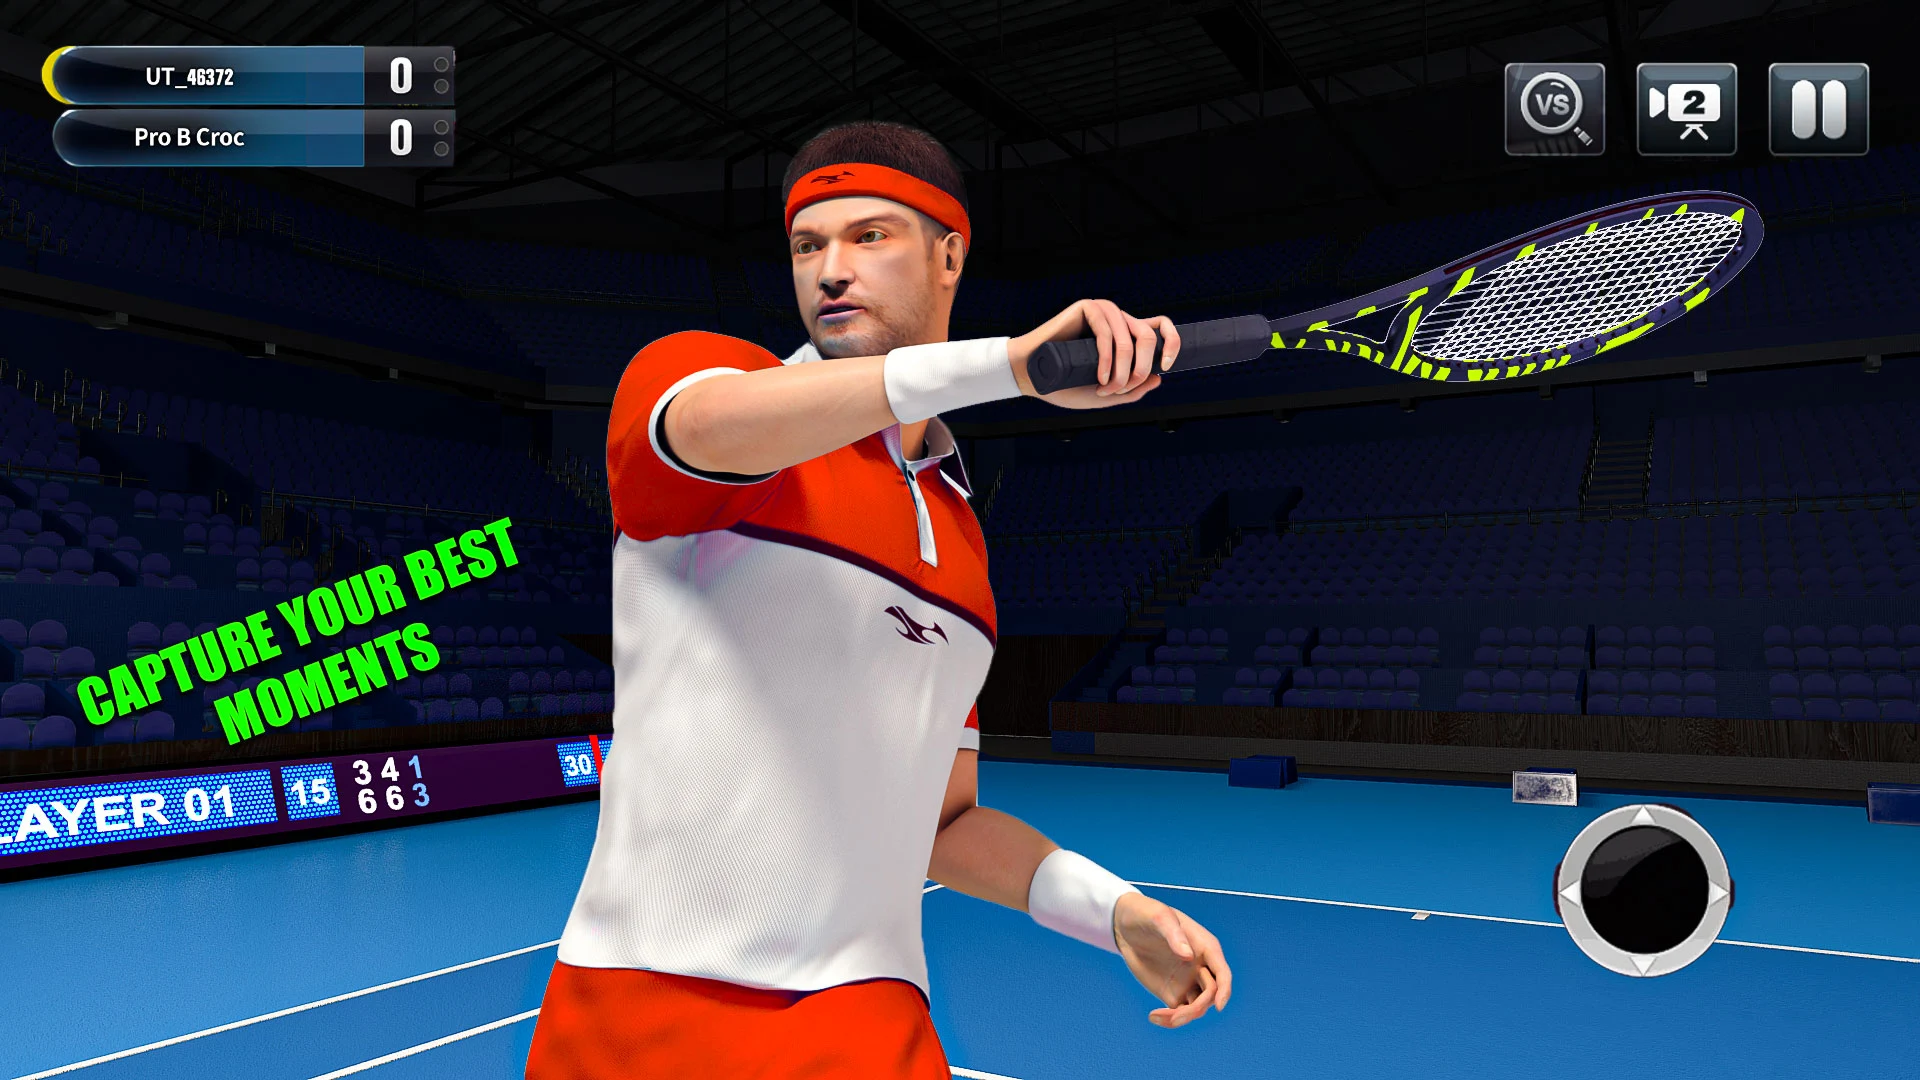 Permainan bulutangkis tenis 3D